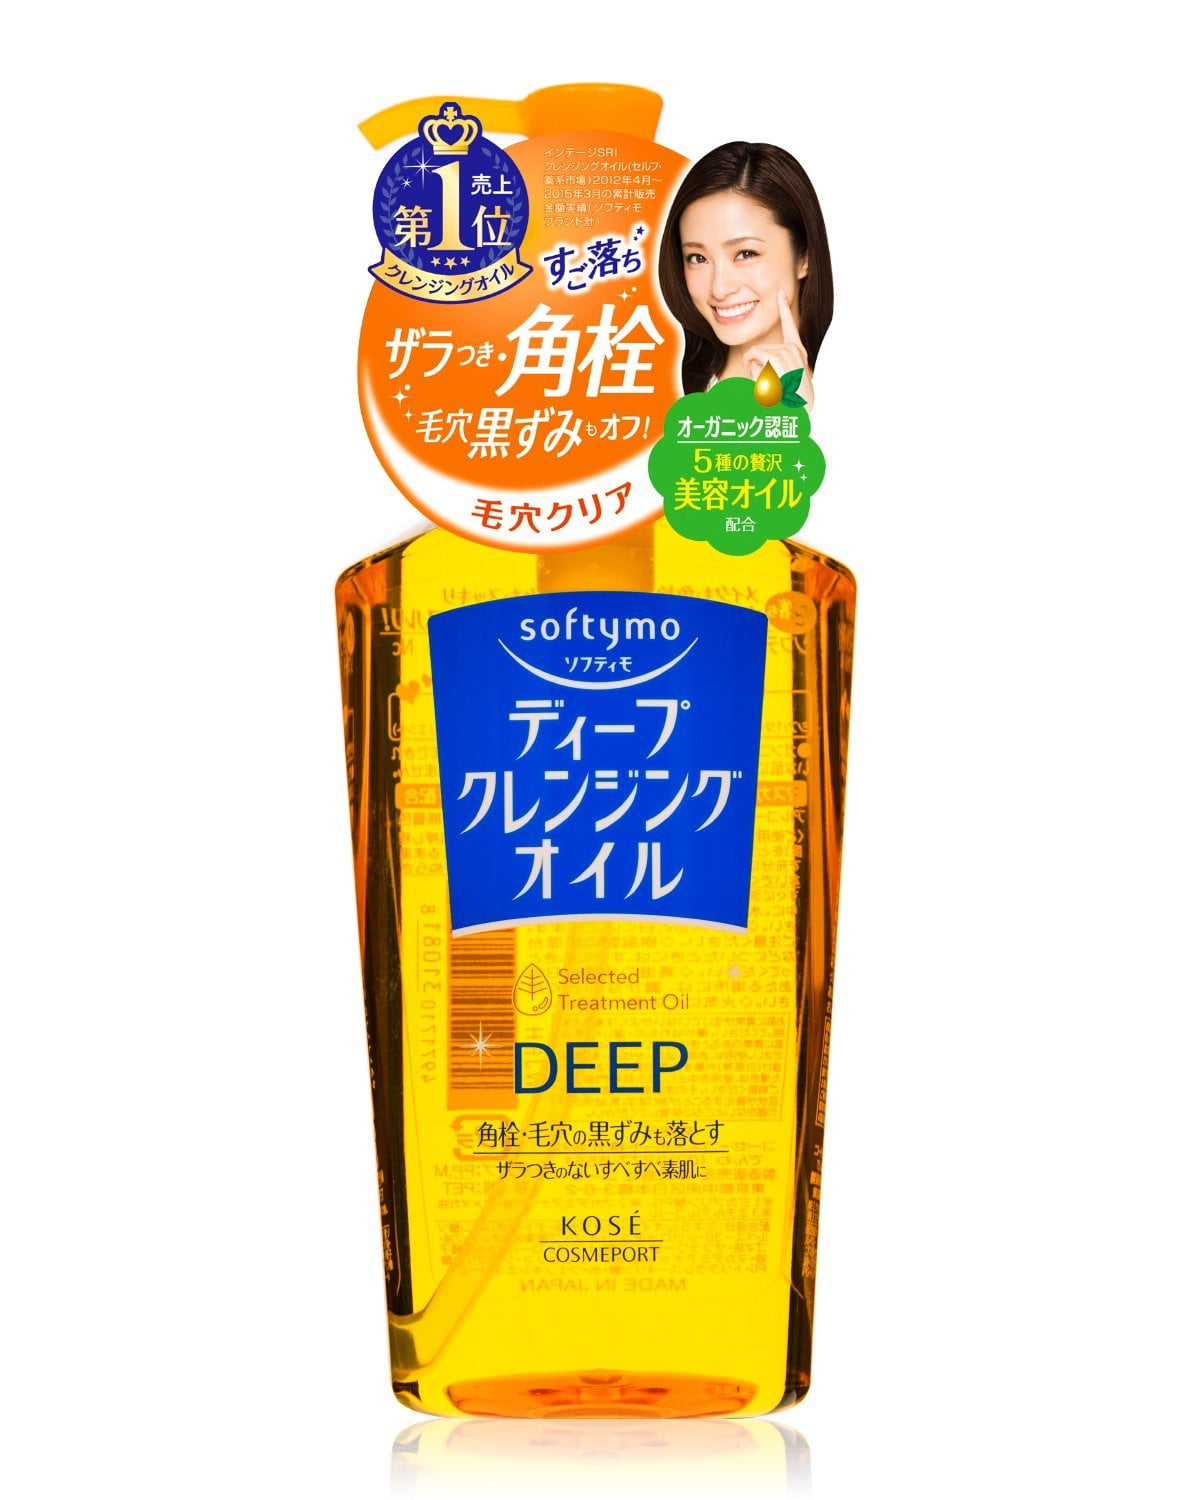 Softymo Kose Speedy - Botella de aceite limpiador (7.8 fl oz, 2 unidades)